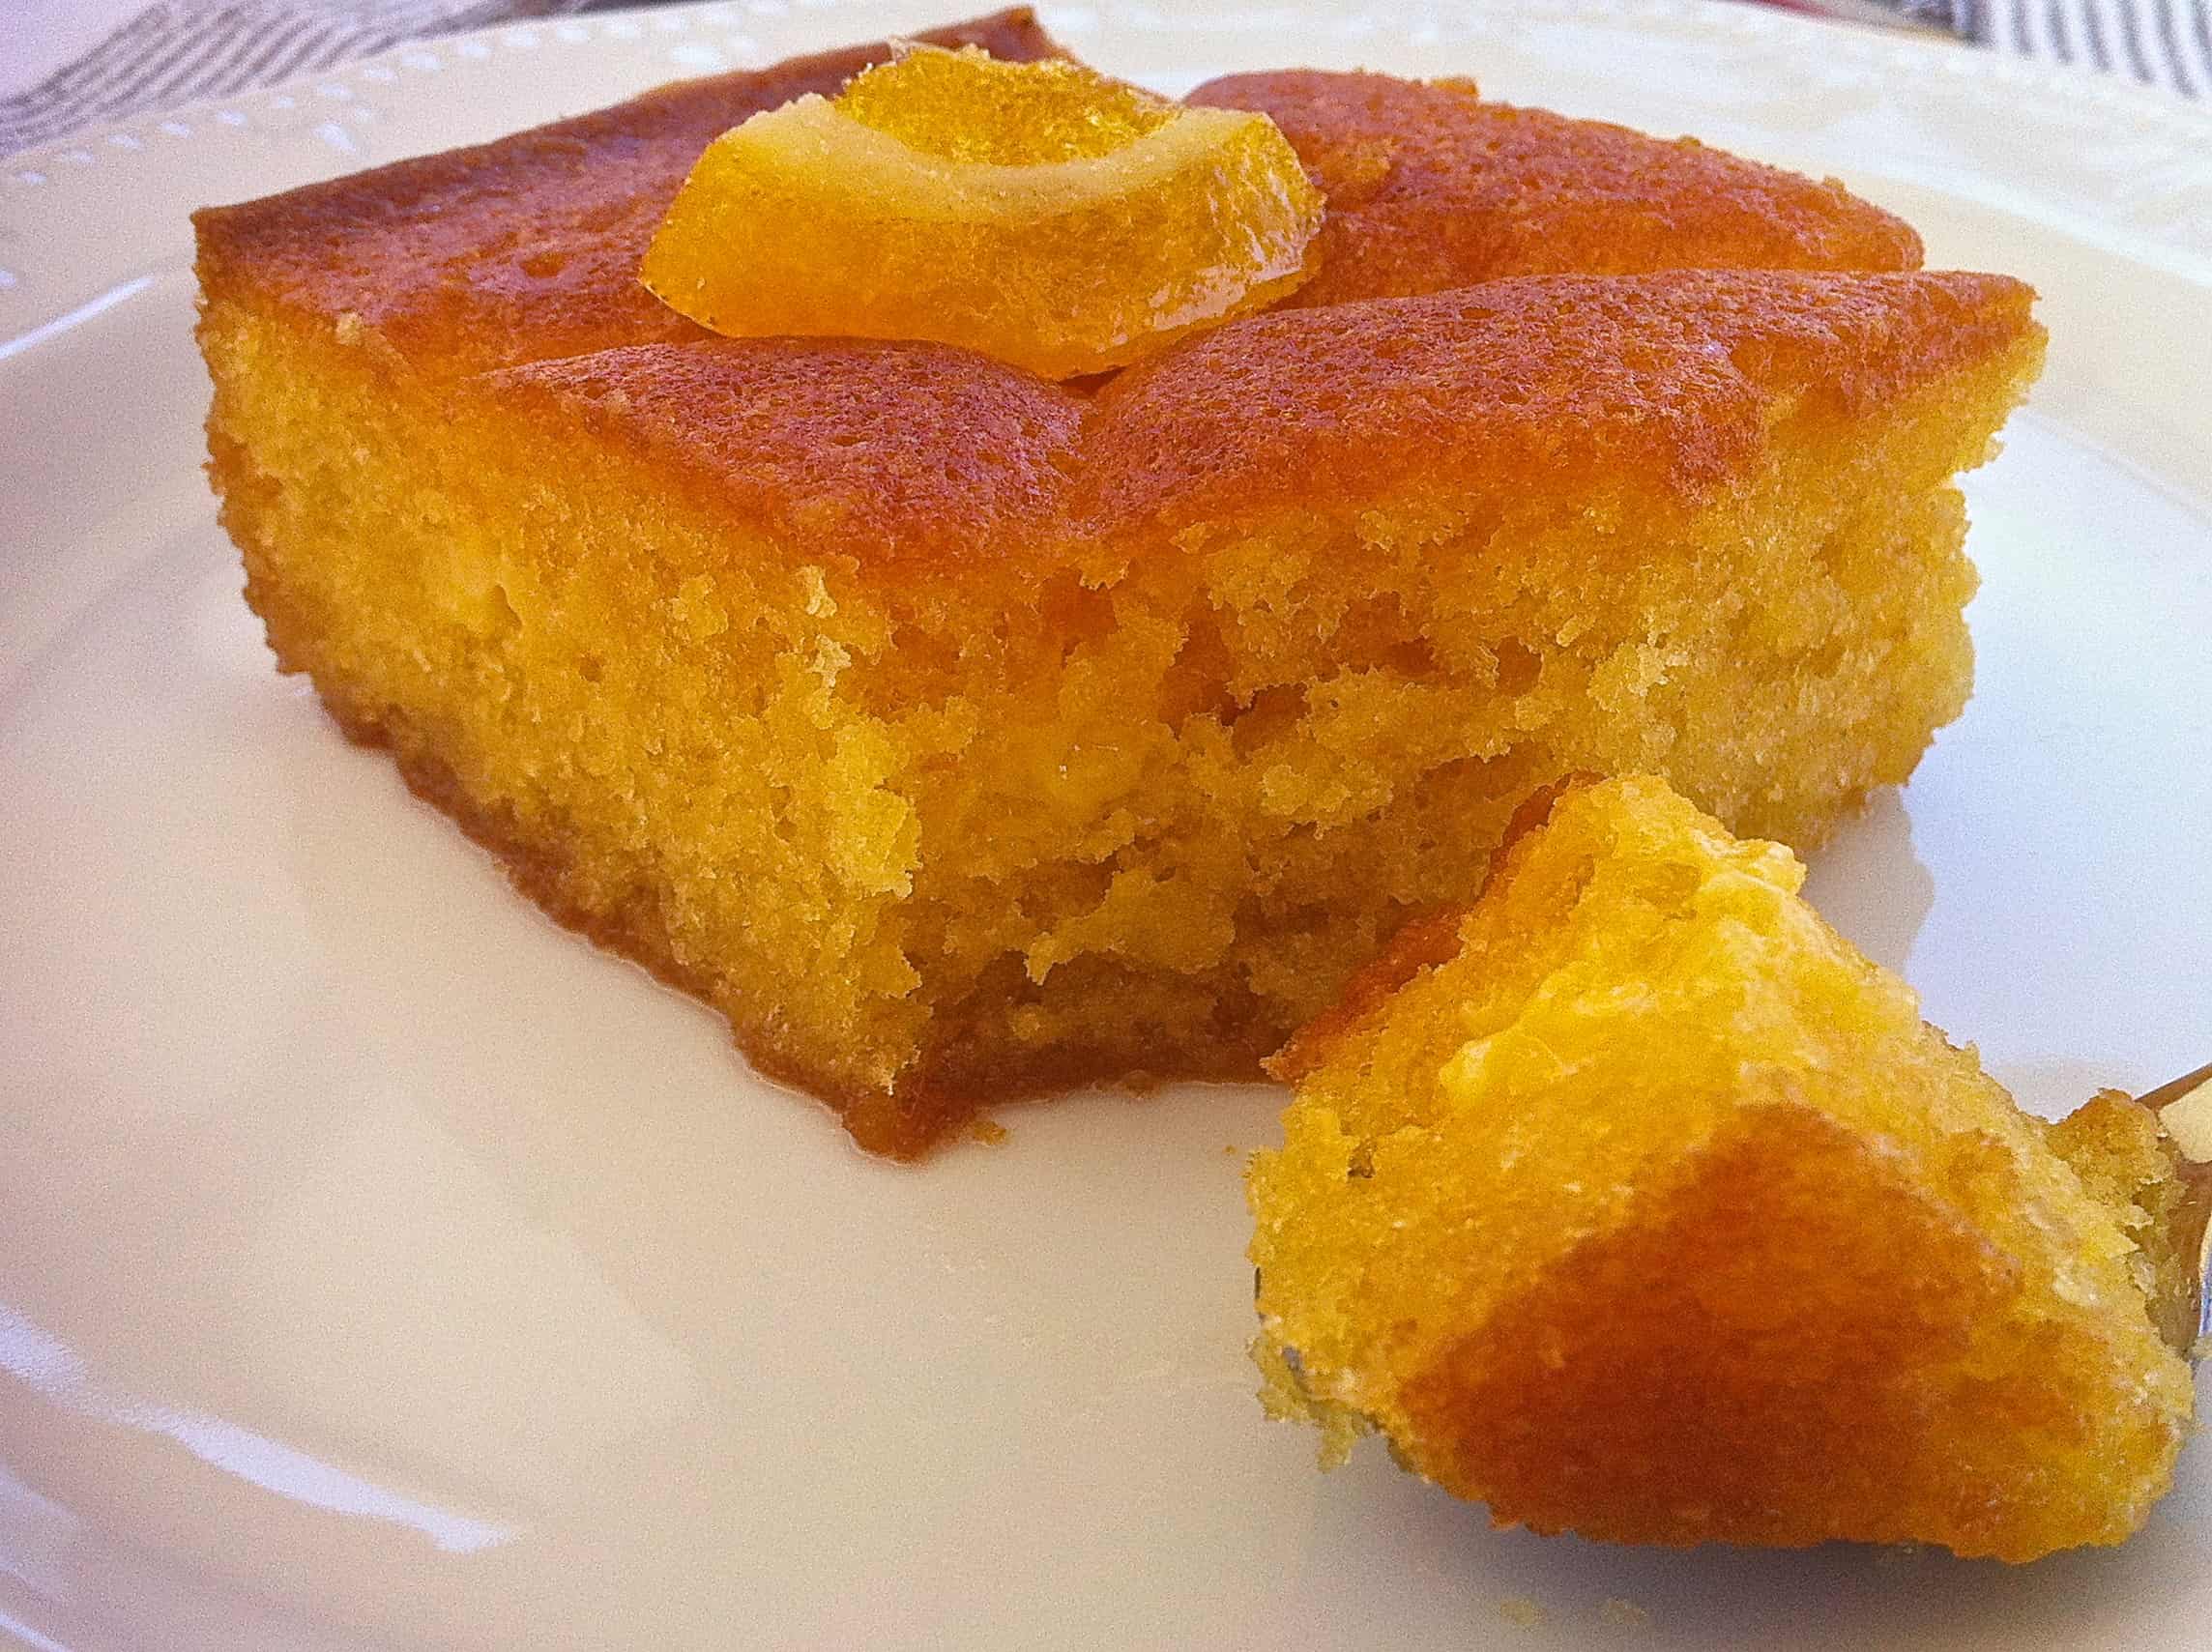 Traditional Greek Orange Cake with Syrup (Portokalopita)